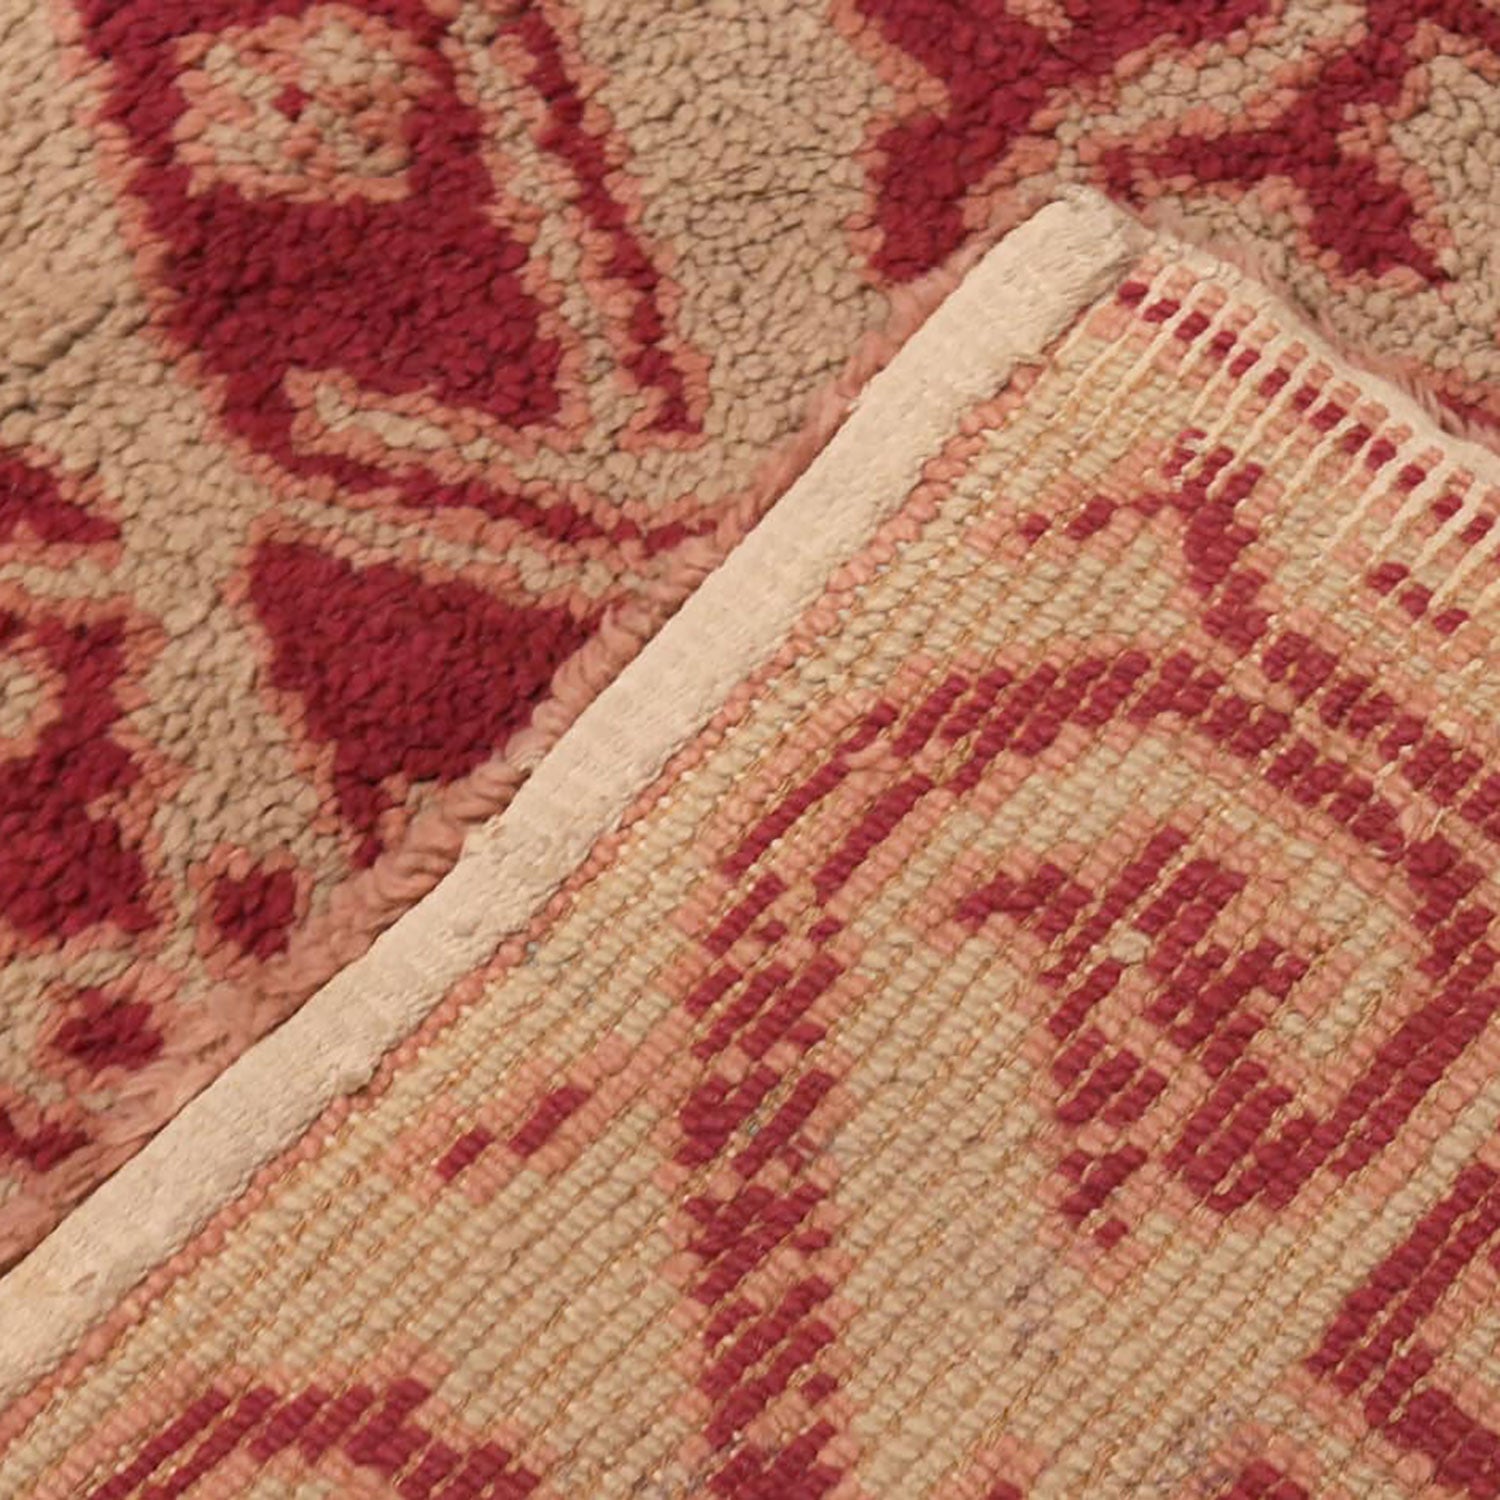 Close-up of two flooring materials: plush carpet meets flatweave mat.